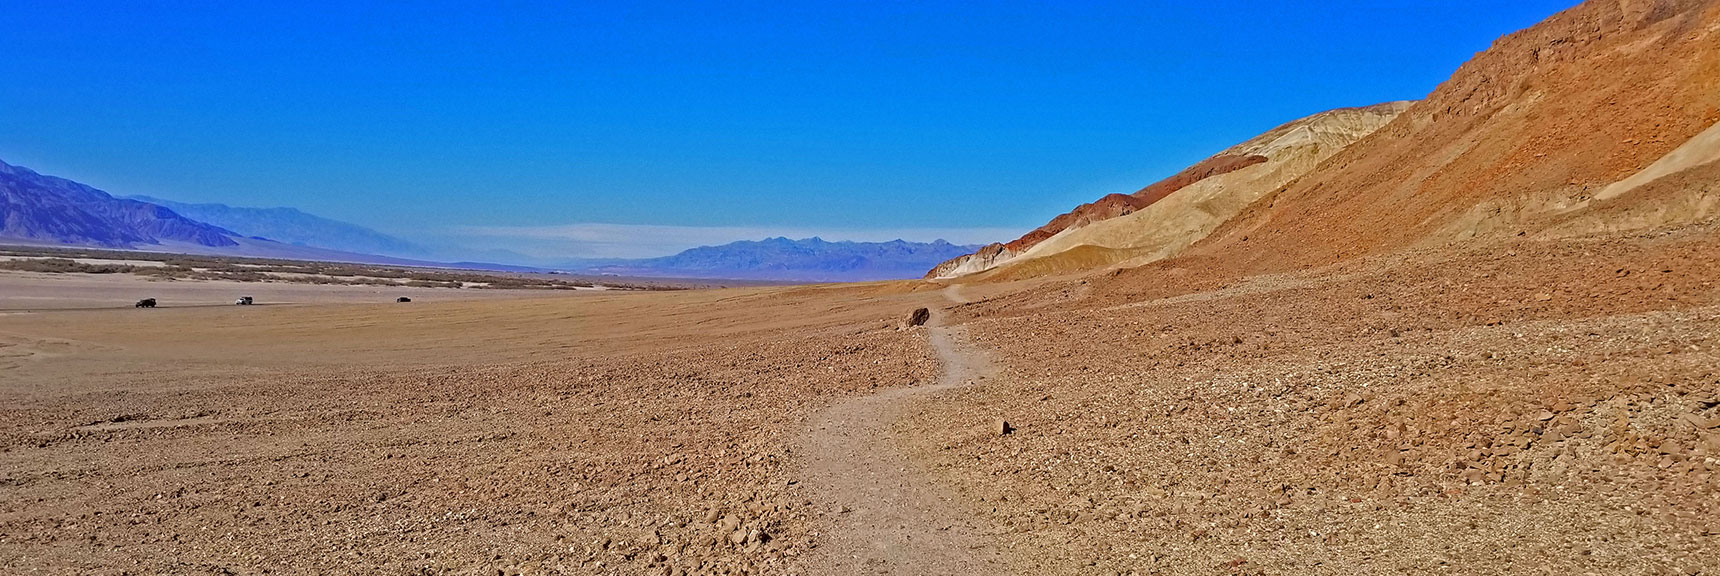 Return Trail Toward Golden Canyon Trailhead | Golden Canyon to Zabriskie Point | Death Valley National Park, California